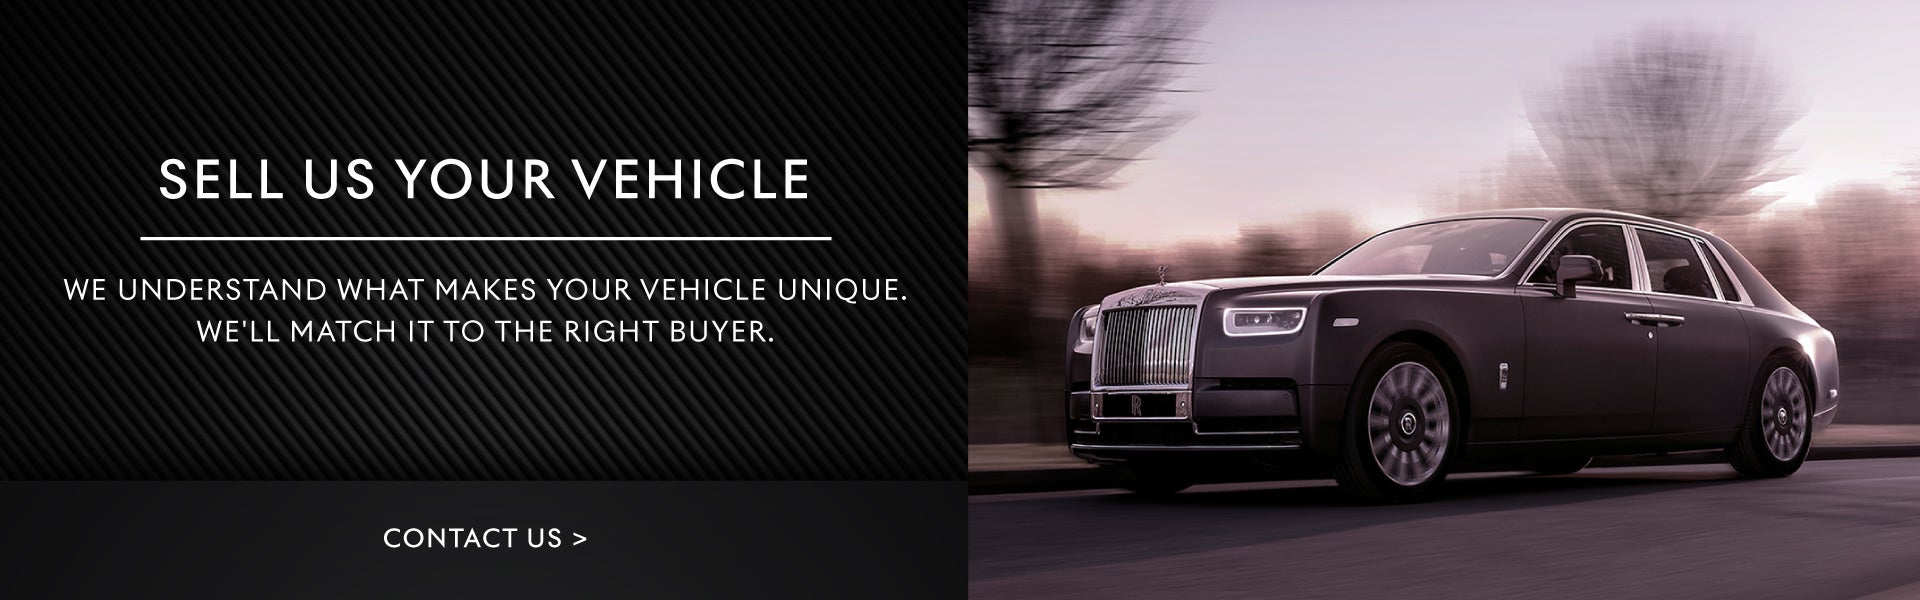 Baltimore Exotic Car Rental  Rolls Royce Phantom Rental  Maryland Luxury  Automobile For Rent  Rent It Today